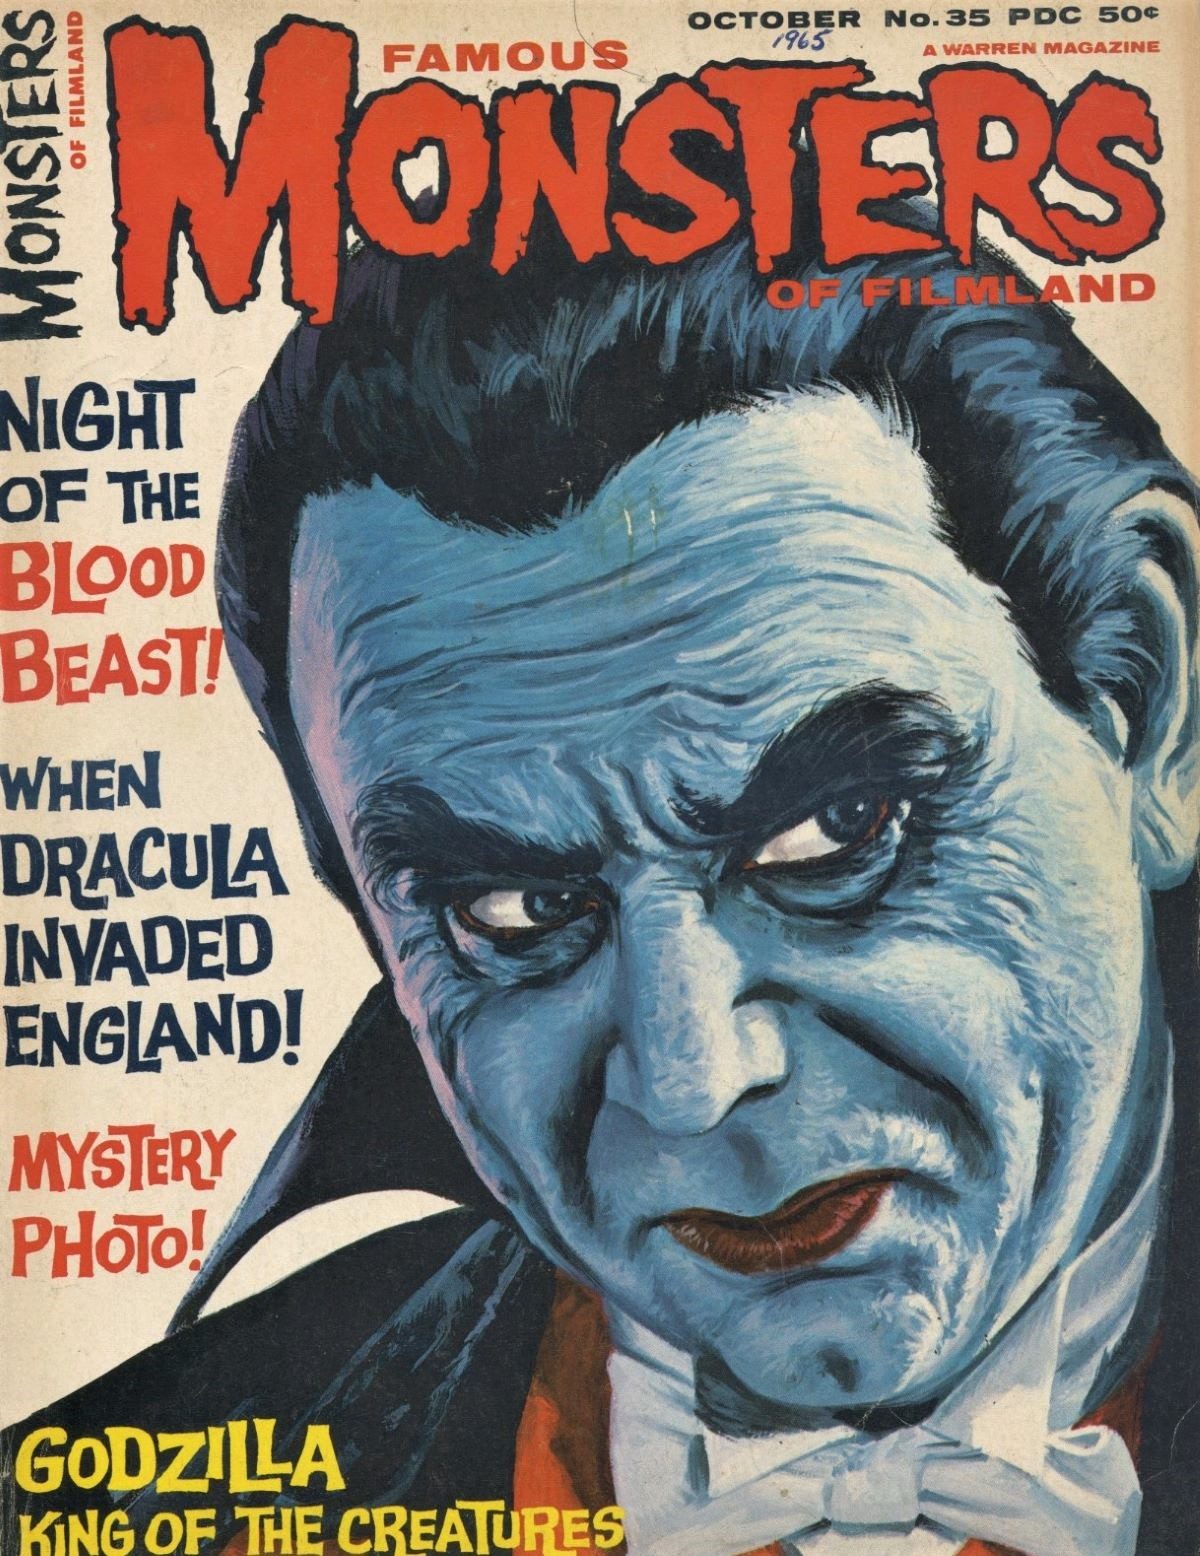 Famous Monsters of Filmland, magazine, horror films, Bela Lugosi, Dracula, 1960s